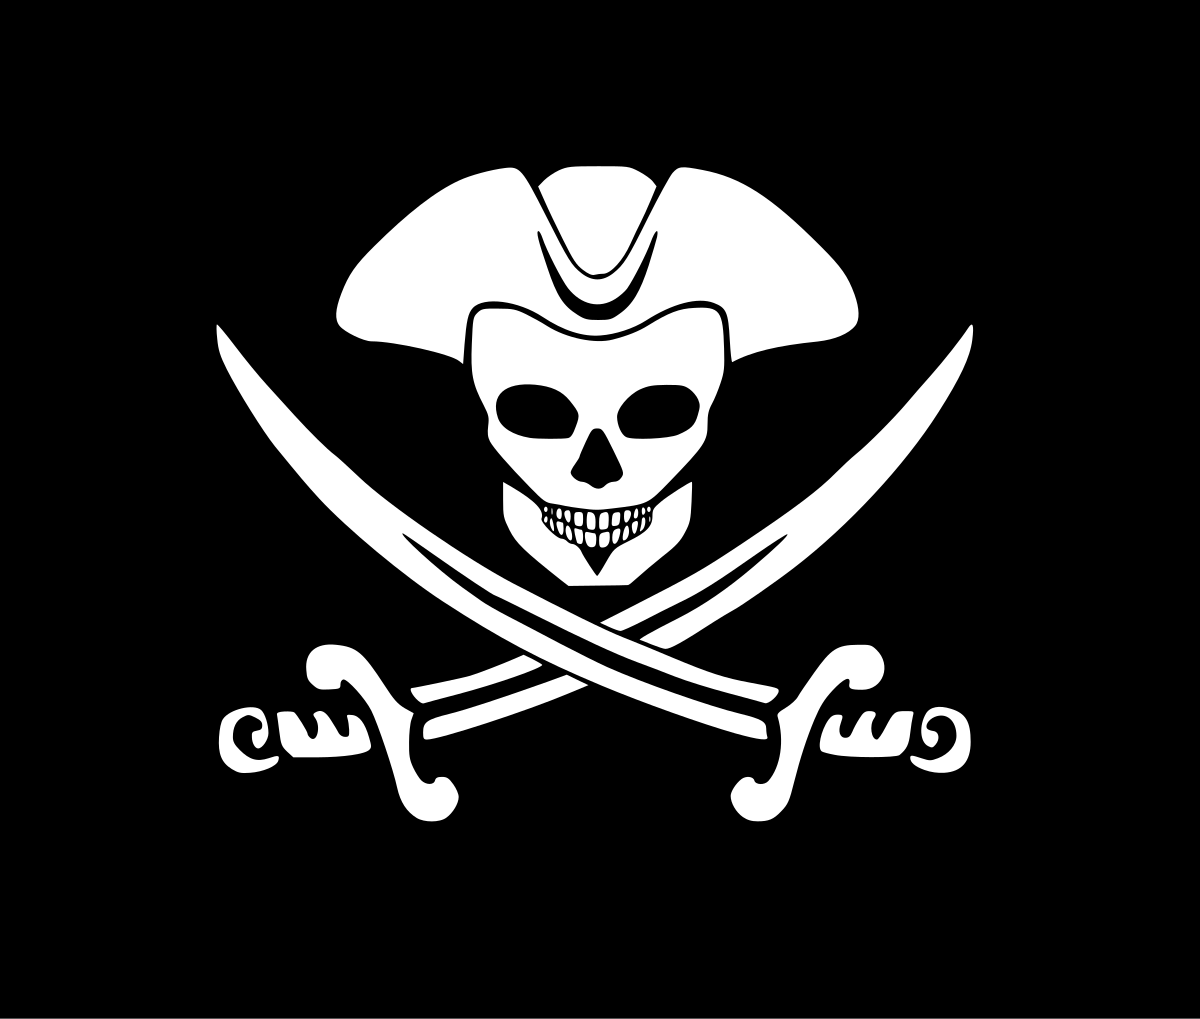 Пиратский флаг Джека Рэкхема